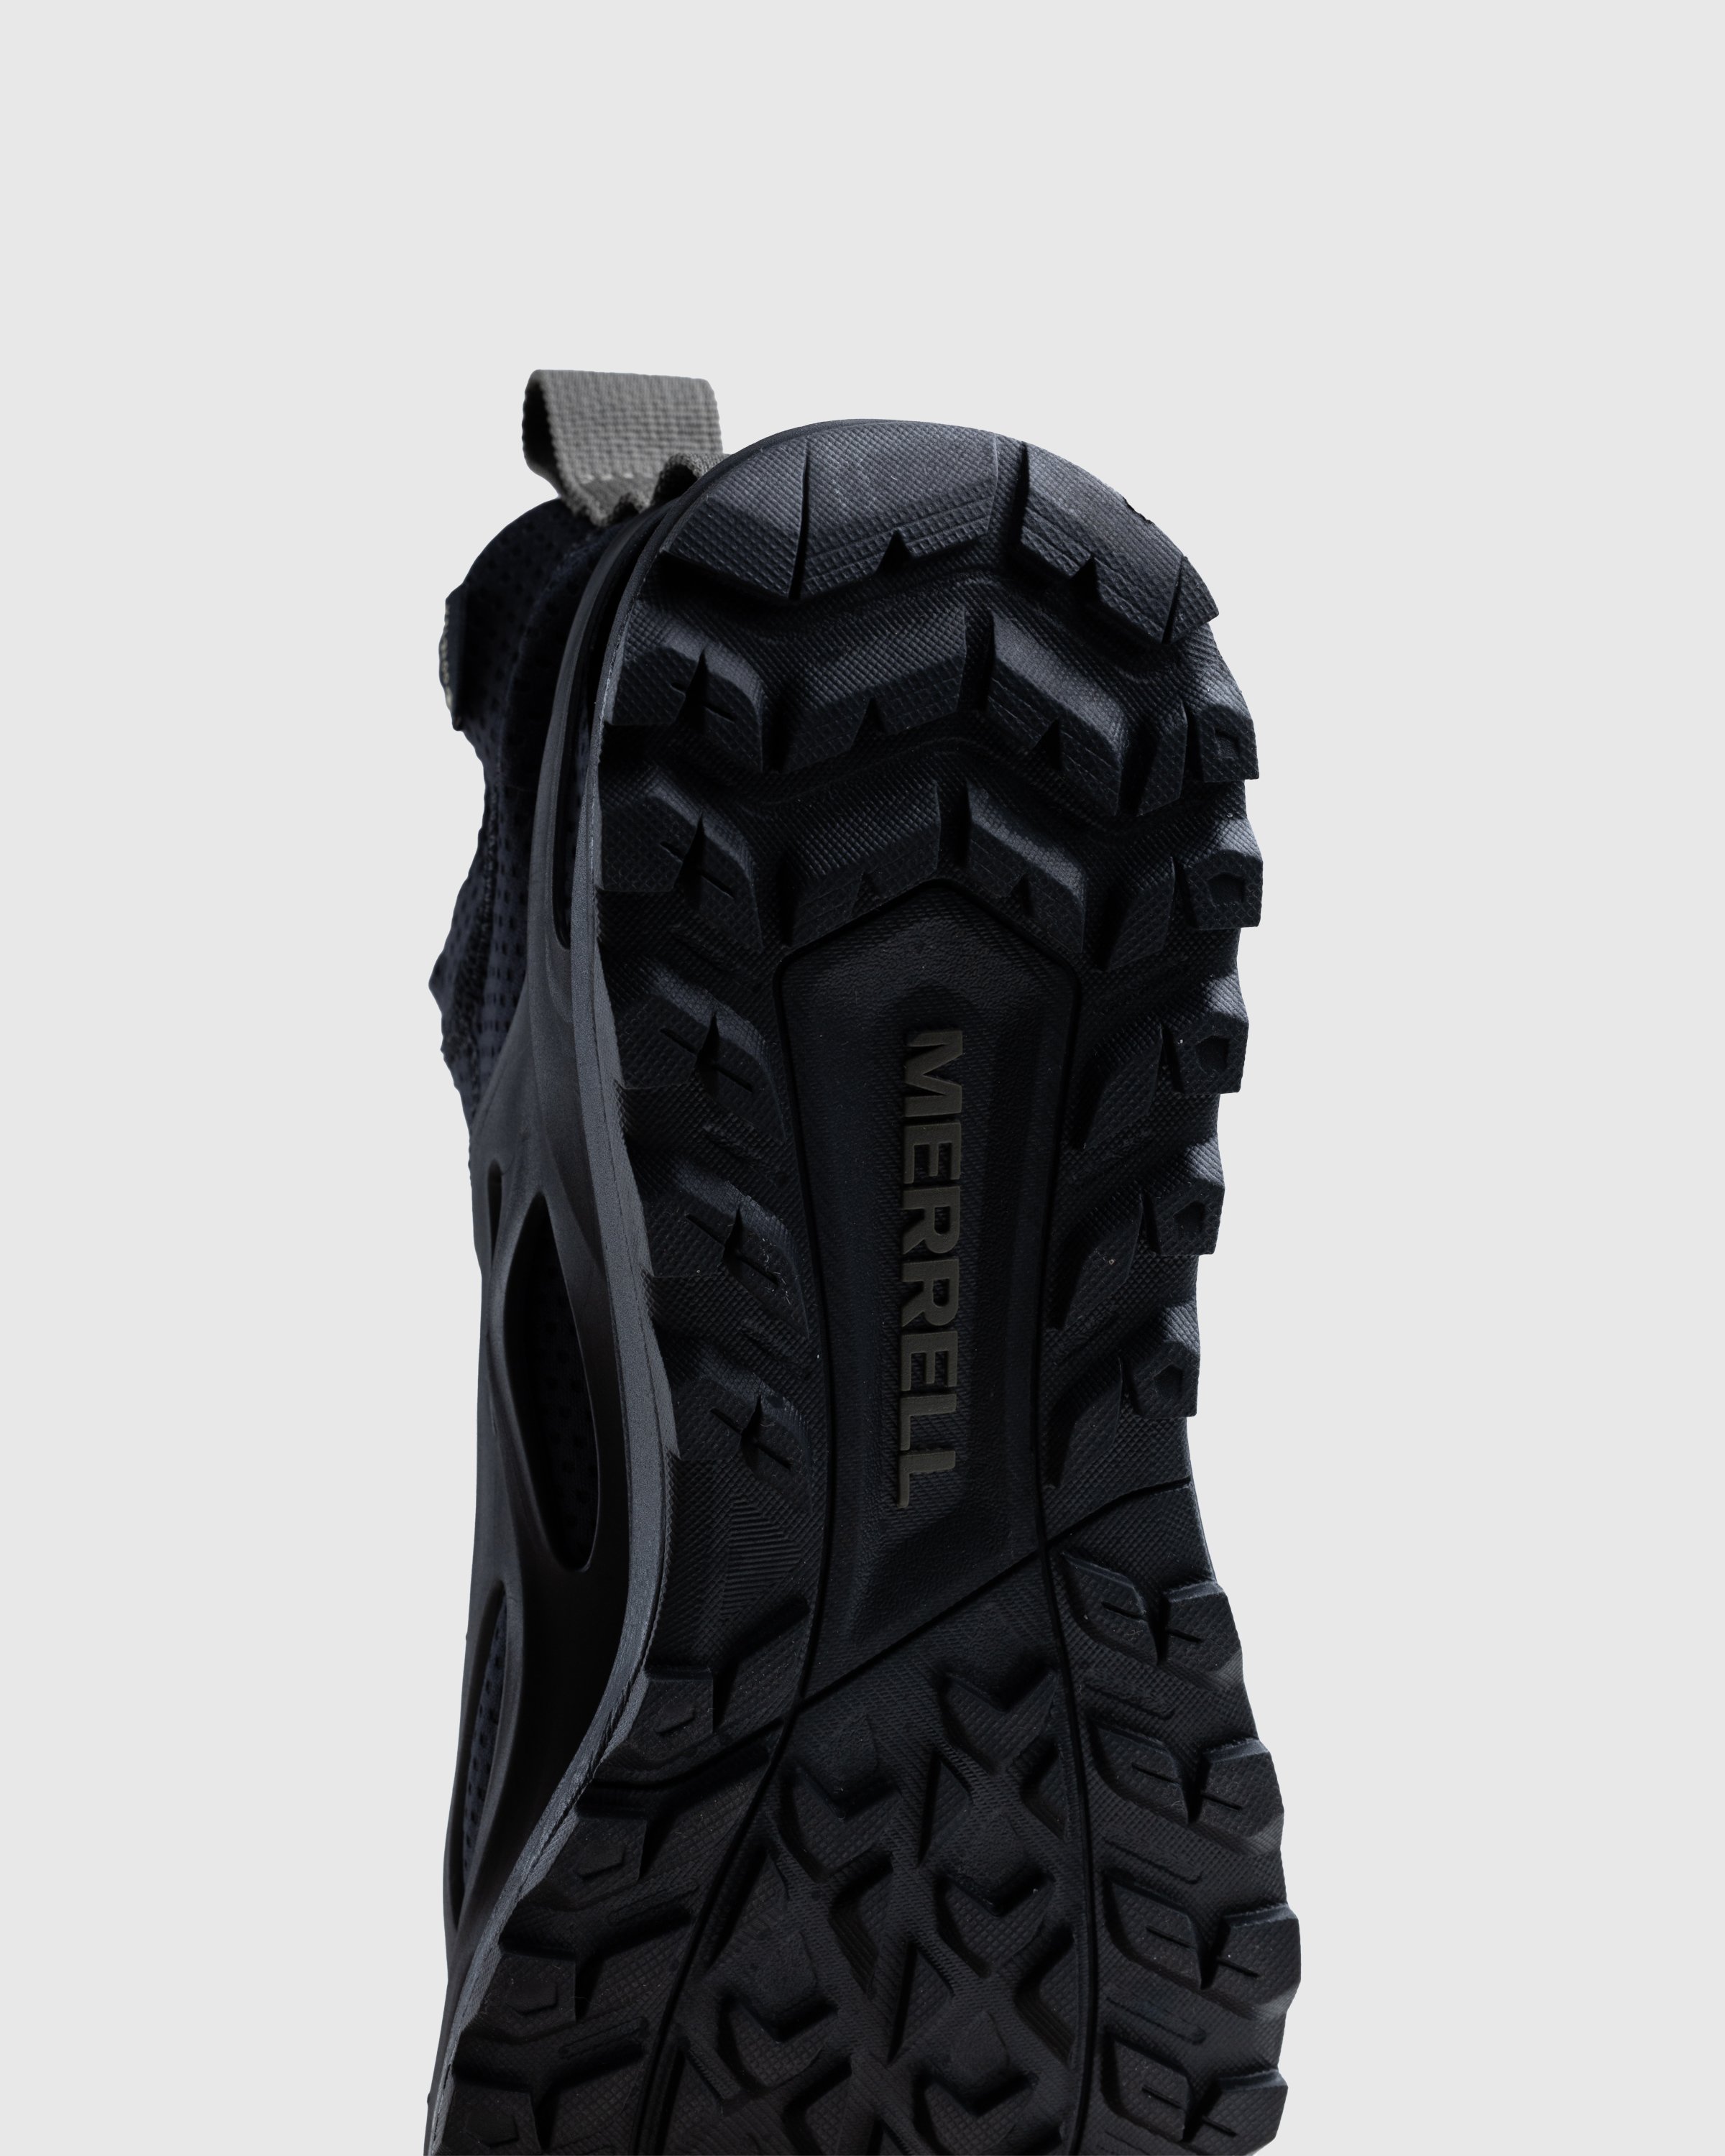 Merrell - Hydro Runner Mid GORE-TEX Black - Footwear - Black - Image 5